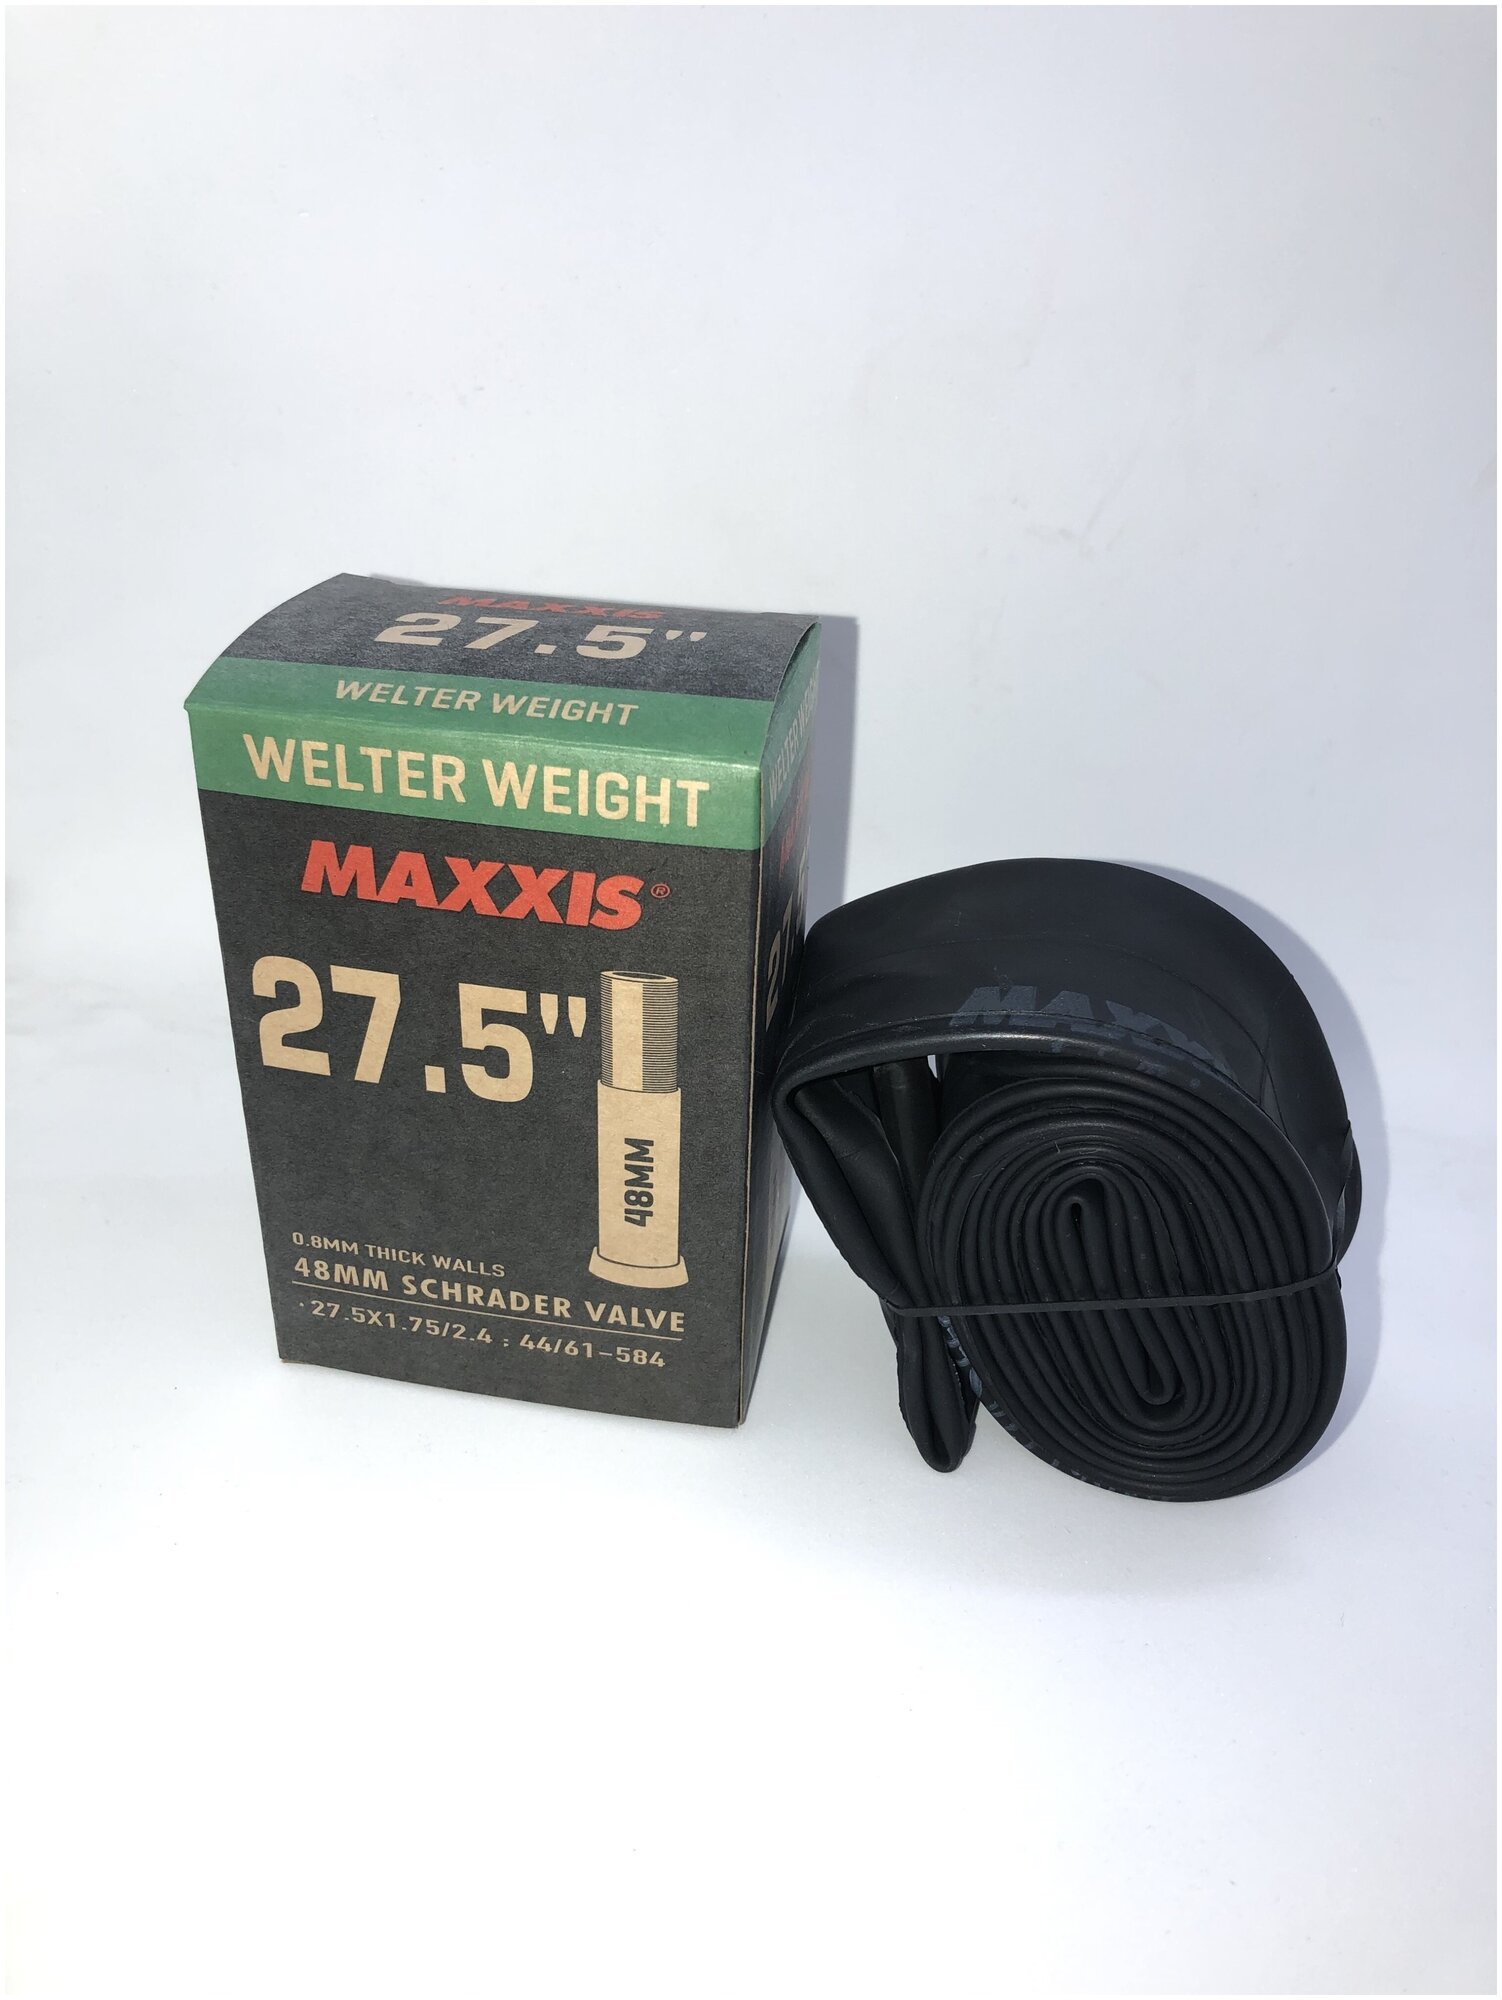 Камера 27.5x1.75/2.4 Maxxis Welter Weight, толщина 0.8 мм, автониппель 48 мм